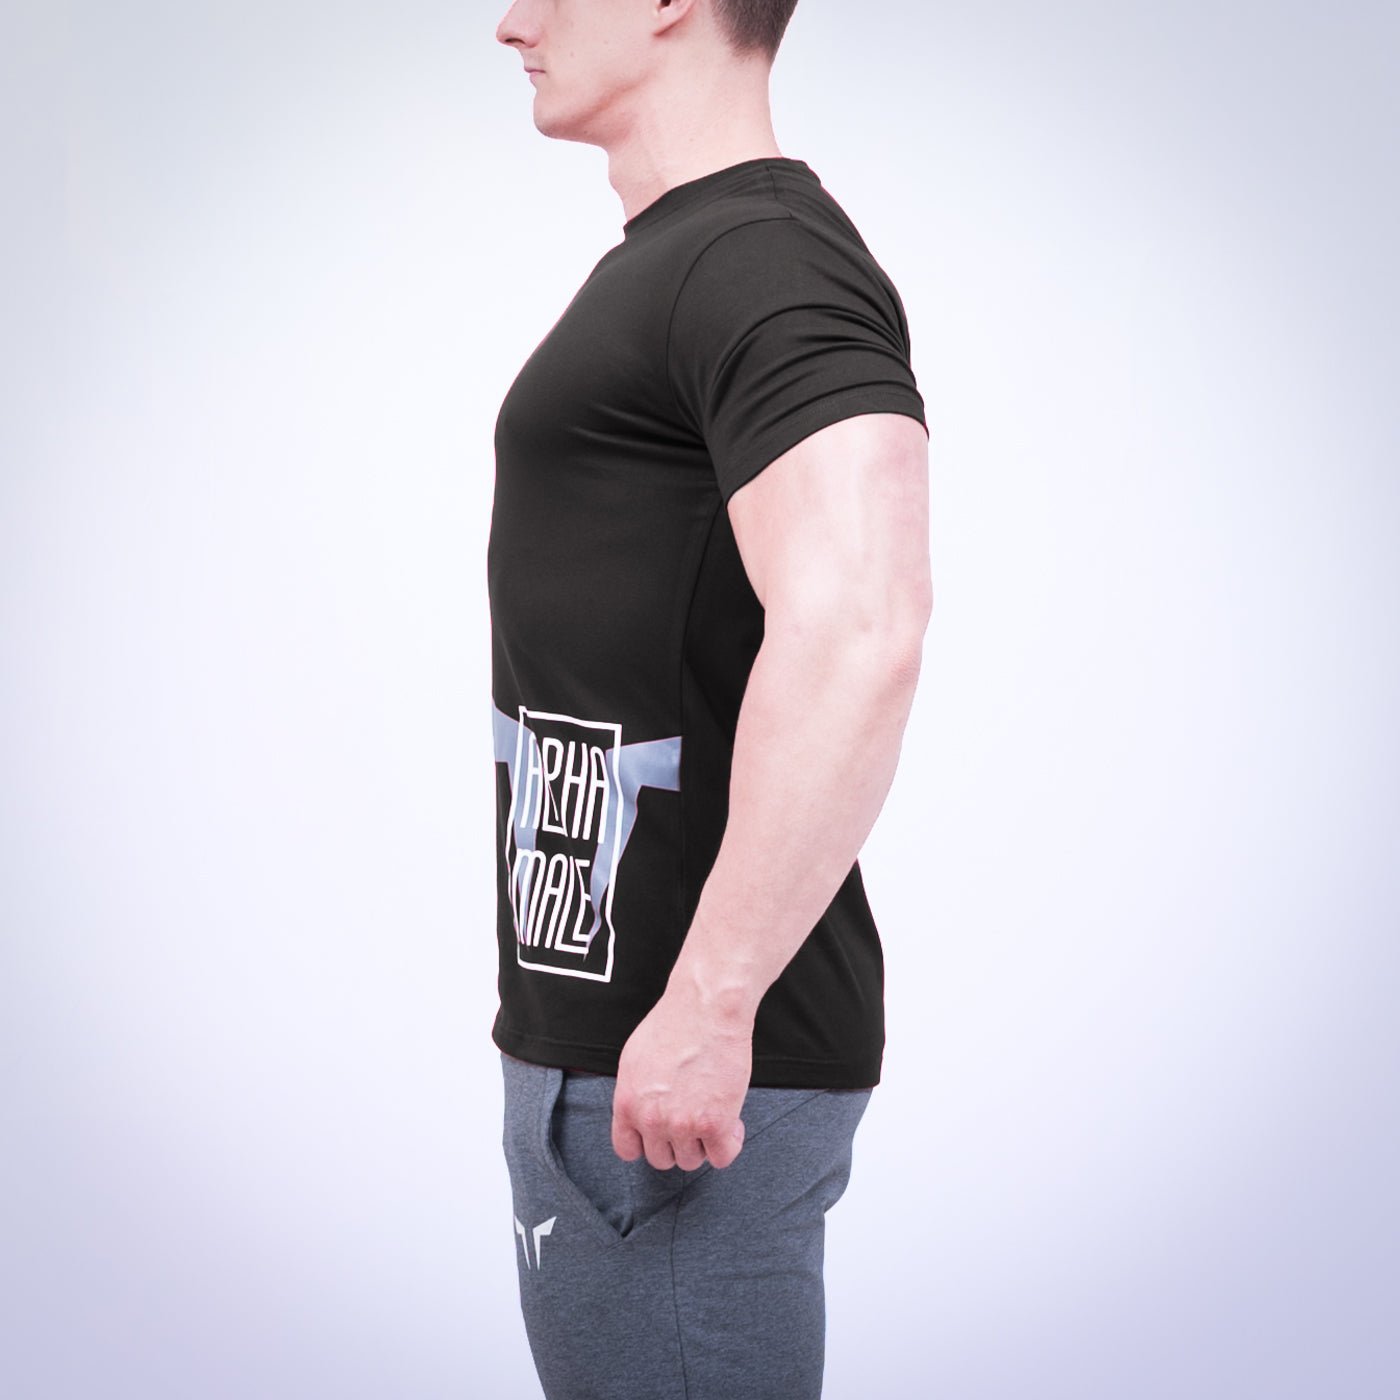 squatwolf-gym-wear-black-alpha-gym-tee-workout-shirts-for-men